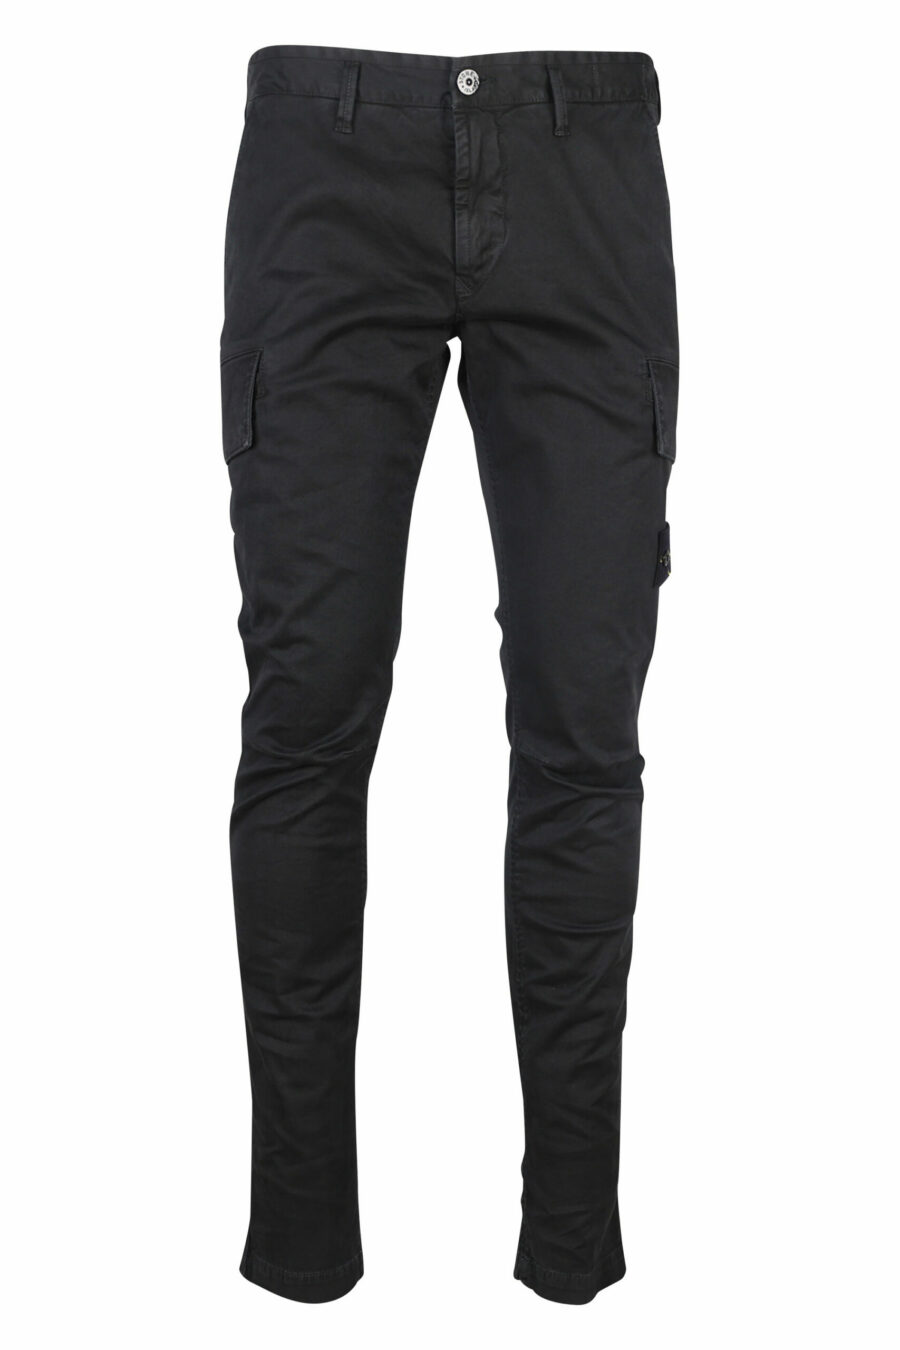 Pantalón negro "skinny" con logo lateral parche - 8052572762253 scaled